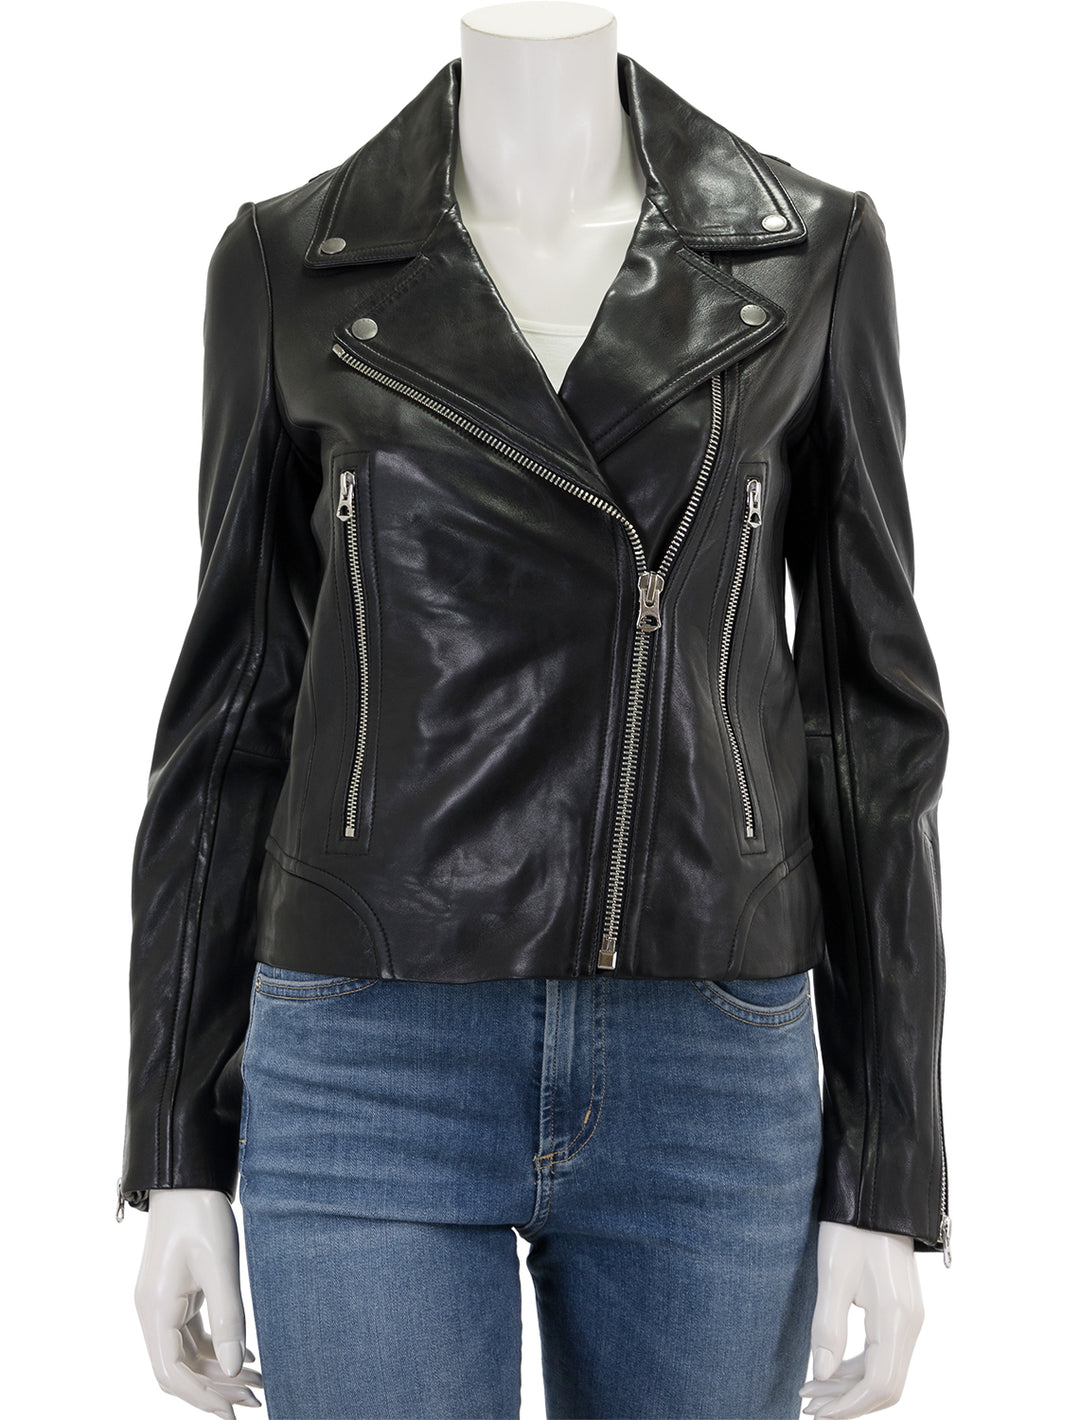 Front view of Rag & Bone's mack jacket in black, zipped.